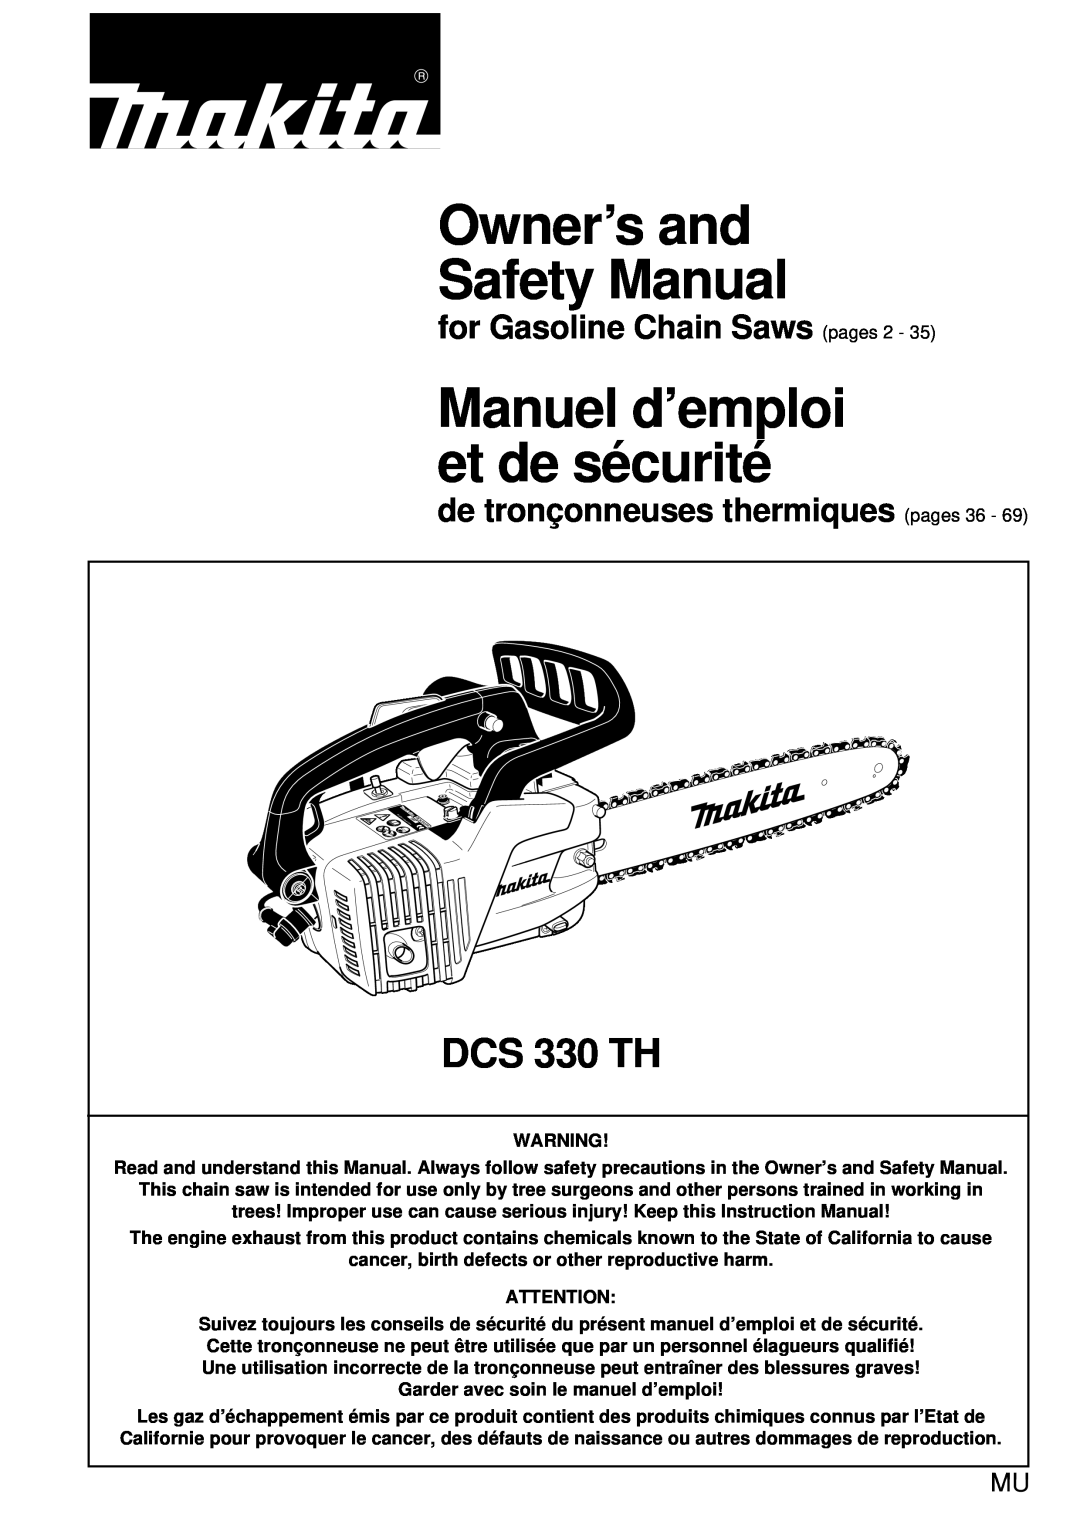 Makita DCS 330 TH instruction manual for Gasoline Chain Saws pages 2, de tronçonneuses thermiques pages 36 